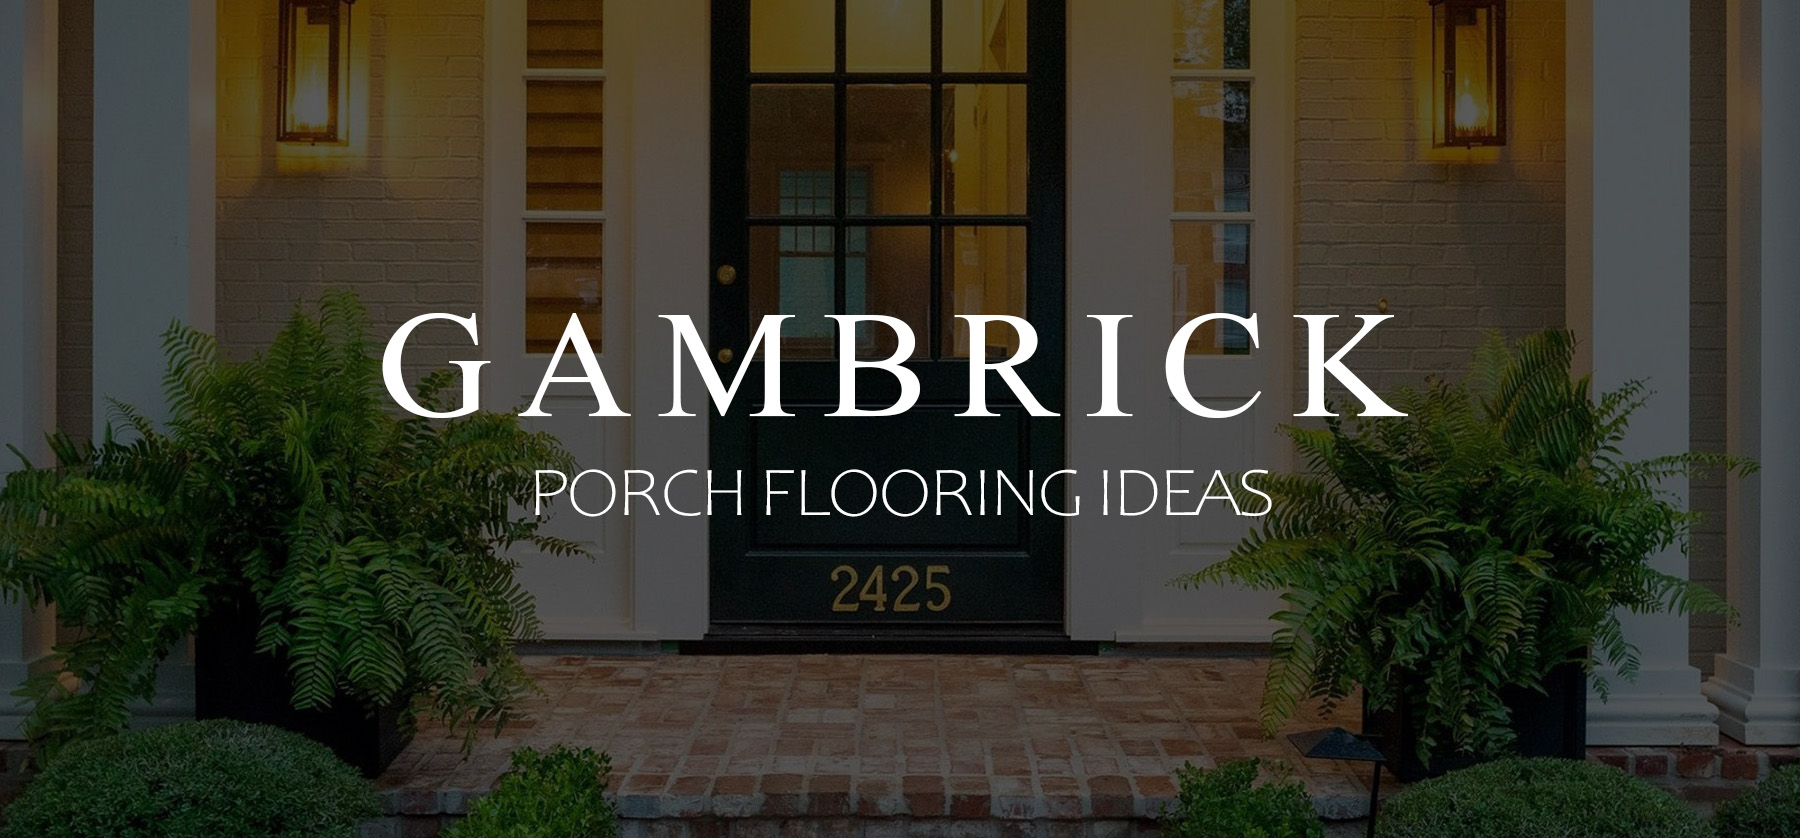 Porch flooring ideas Banner 1